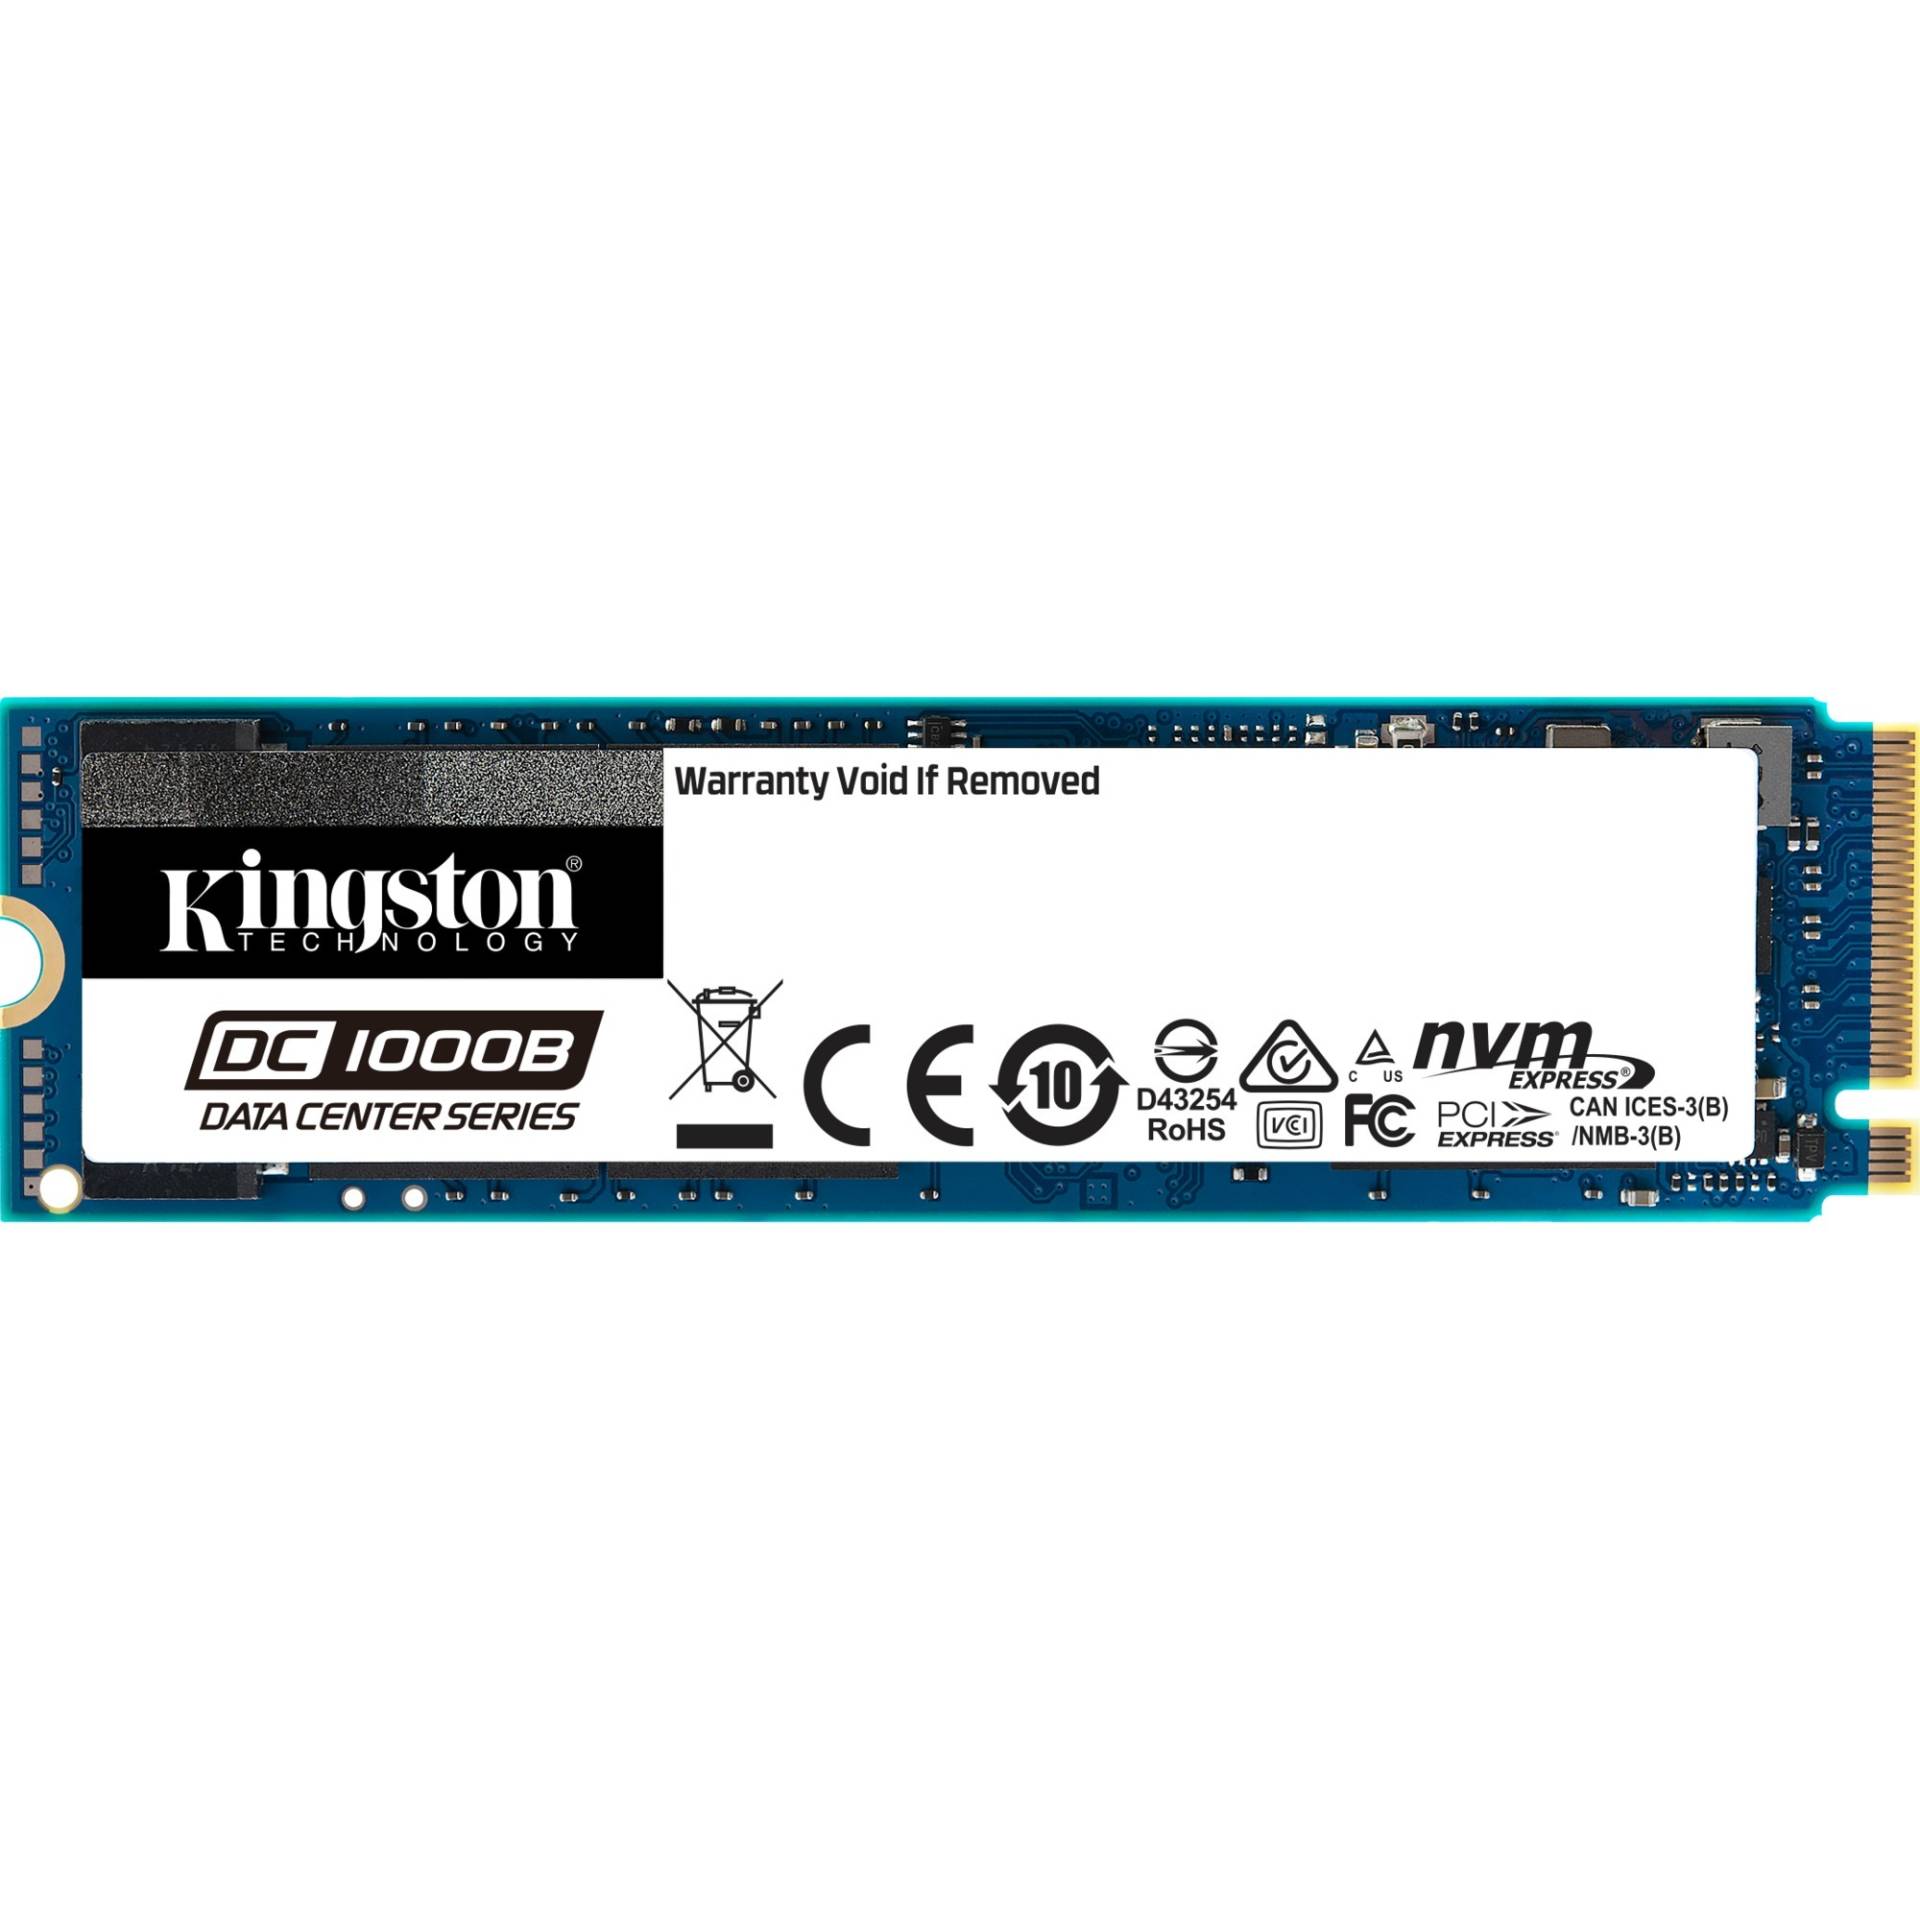 DC1000B 480 GB, SSD von Kingston